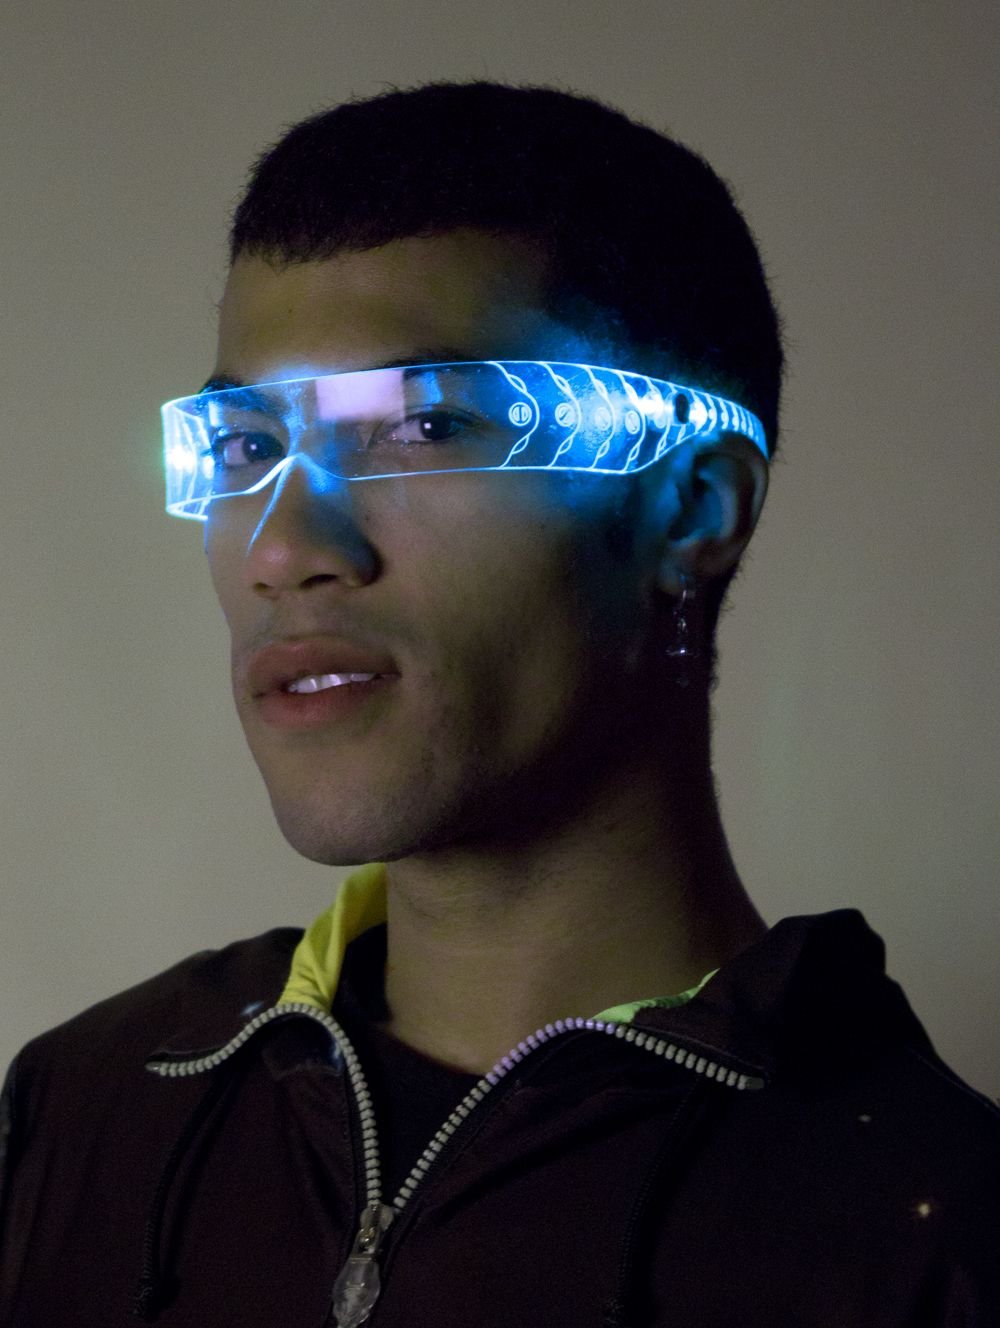 Cyberpunk style очки фото 19